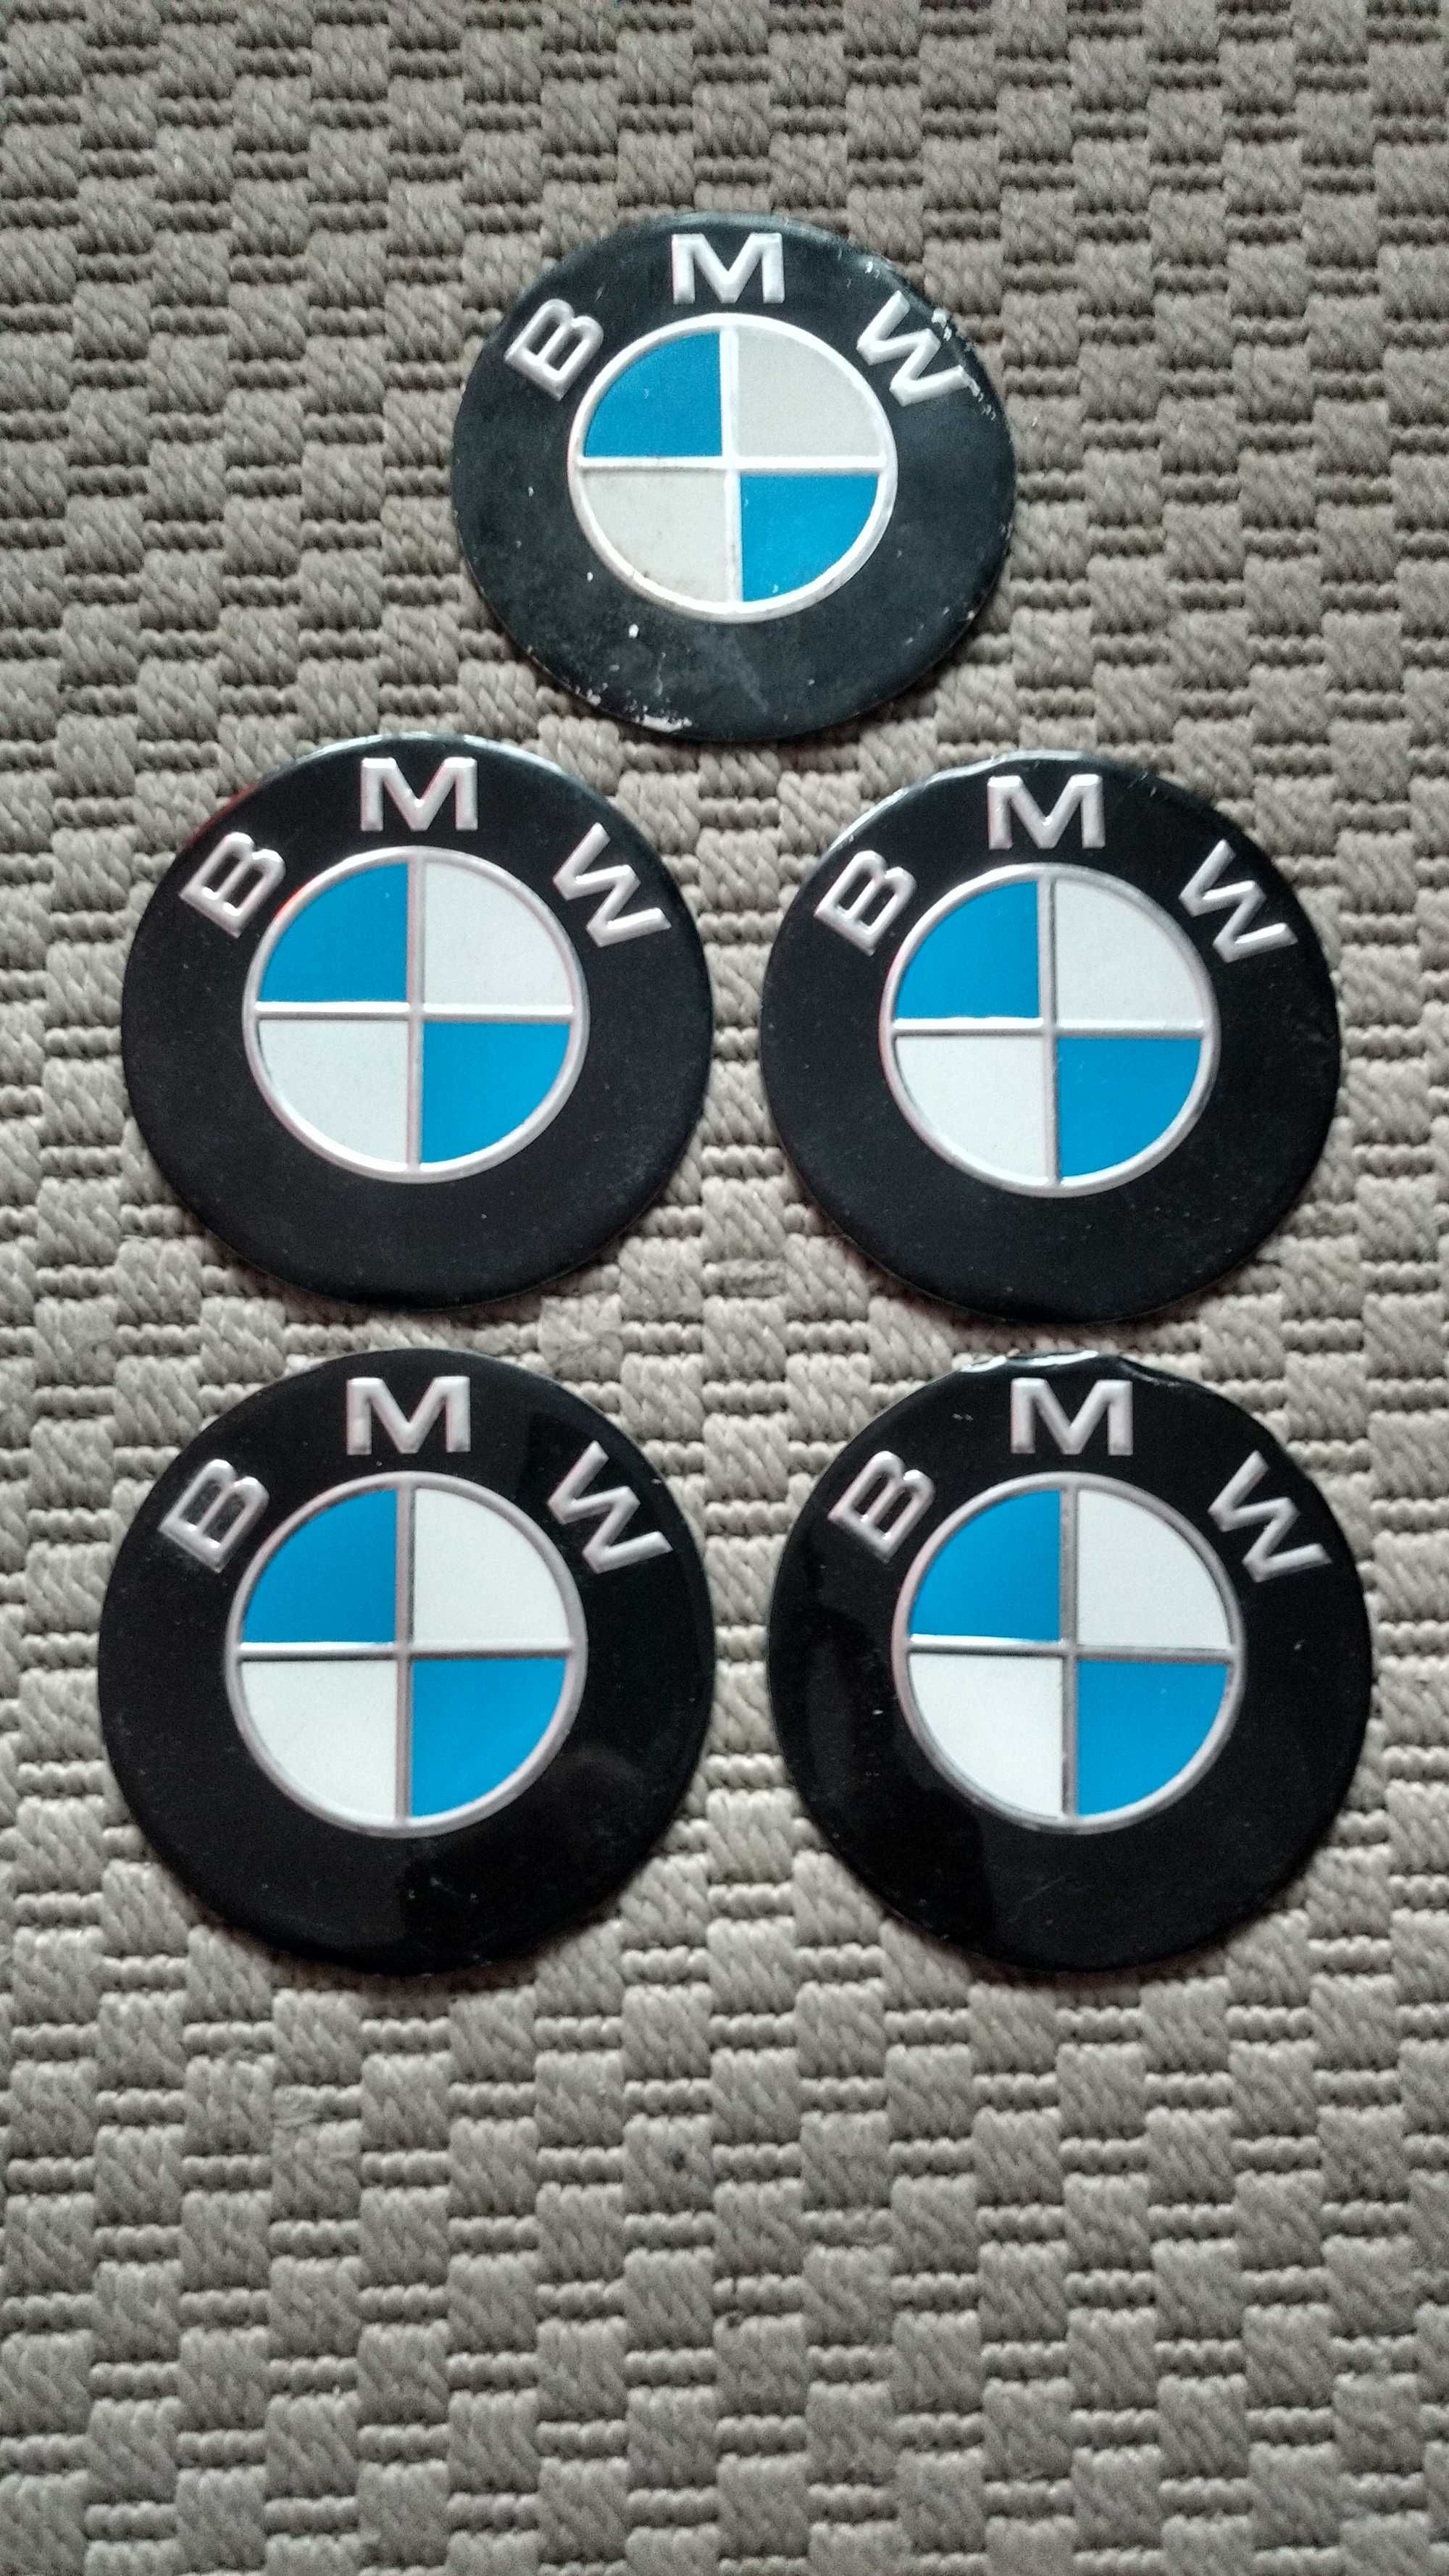 Dekielki naklejki alufelgi BMW 90mm cena za 5 sztuk